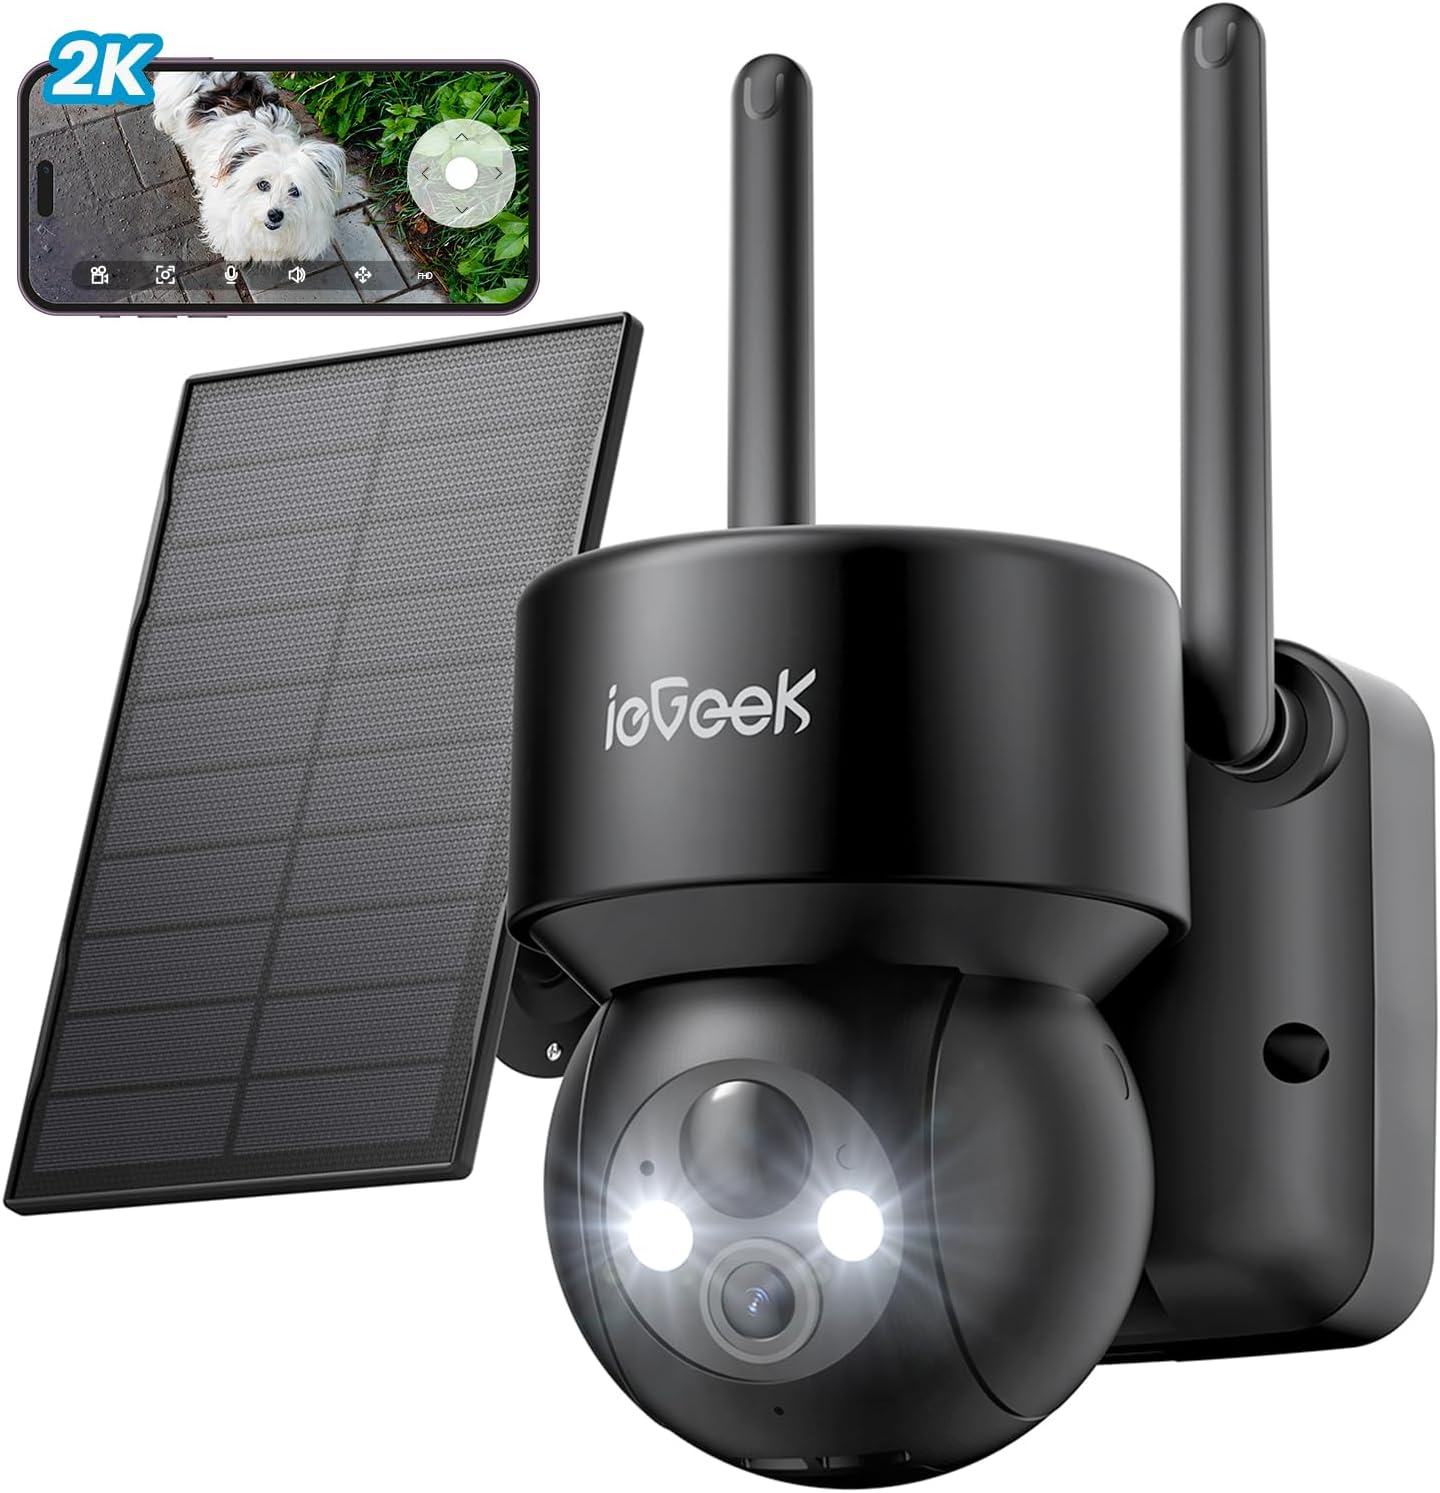 ieGeek Security Cameras Wireless Outdoor - Smart 2K [...]